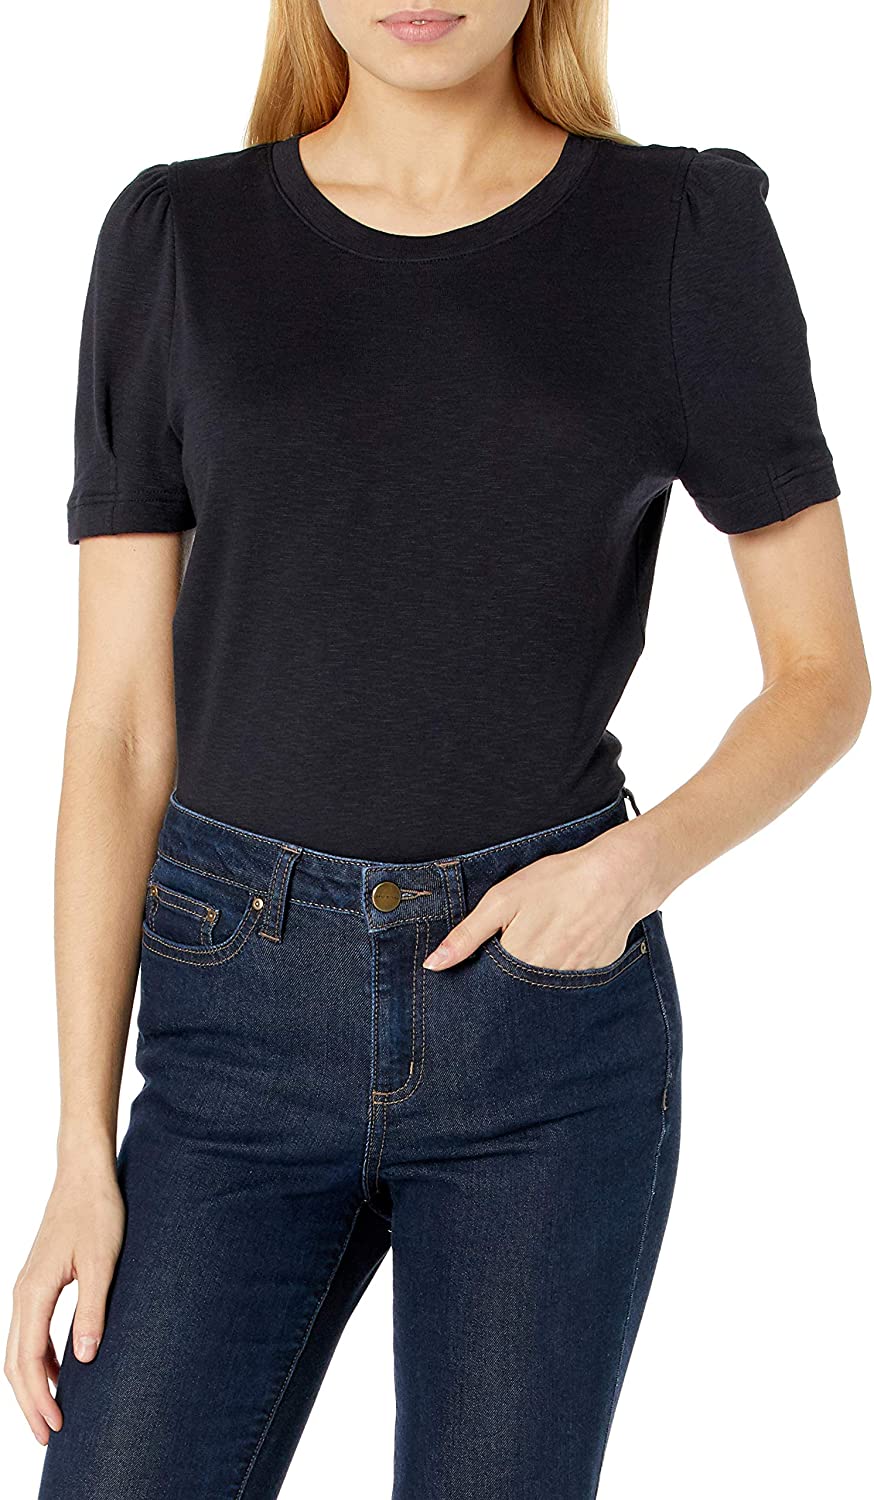 Price:$15.67    Amazon Brand - Daily Ritual Women's Cotton Modal Stretch Slub Puff Sleeve T-Shirt  Clothing